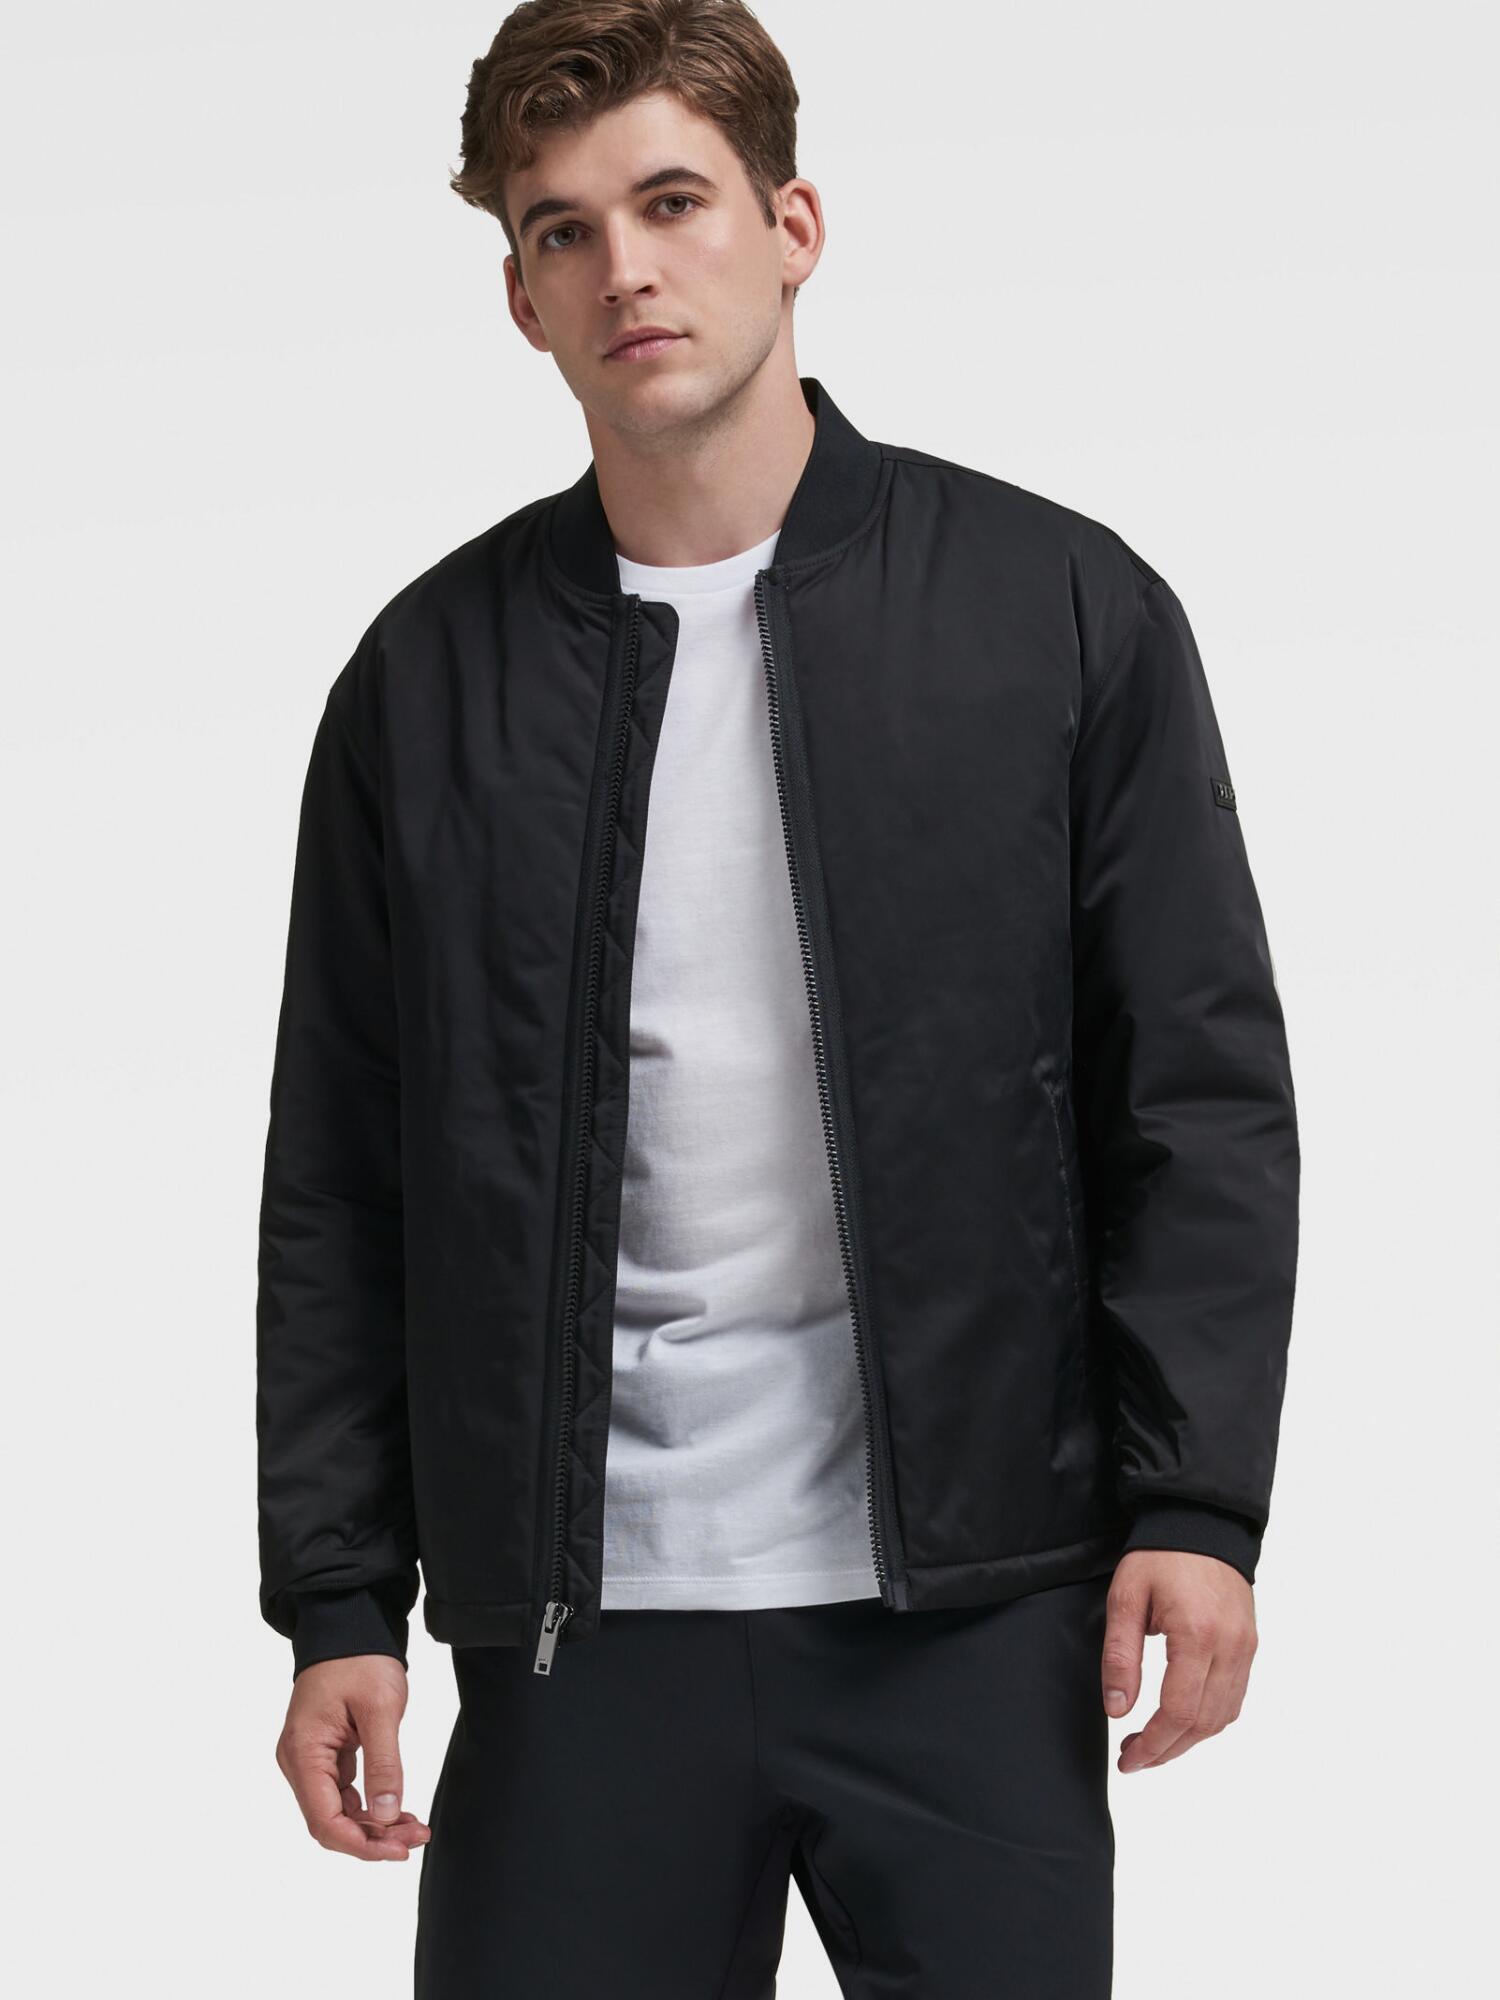 DKNY Synthetic Nylon Bomber Jacket in Black for Men - Lyst